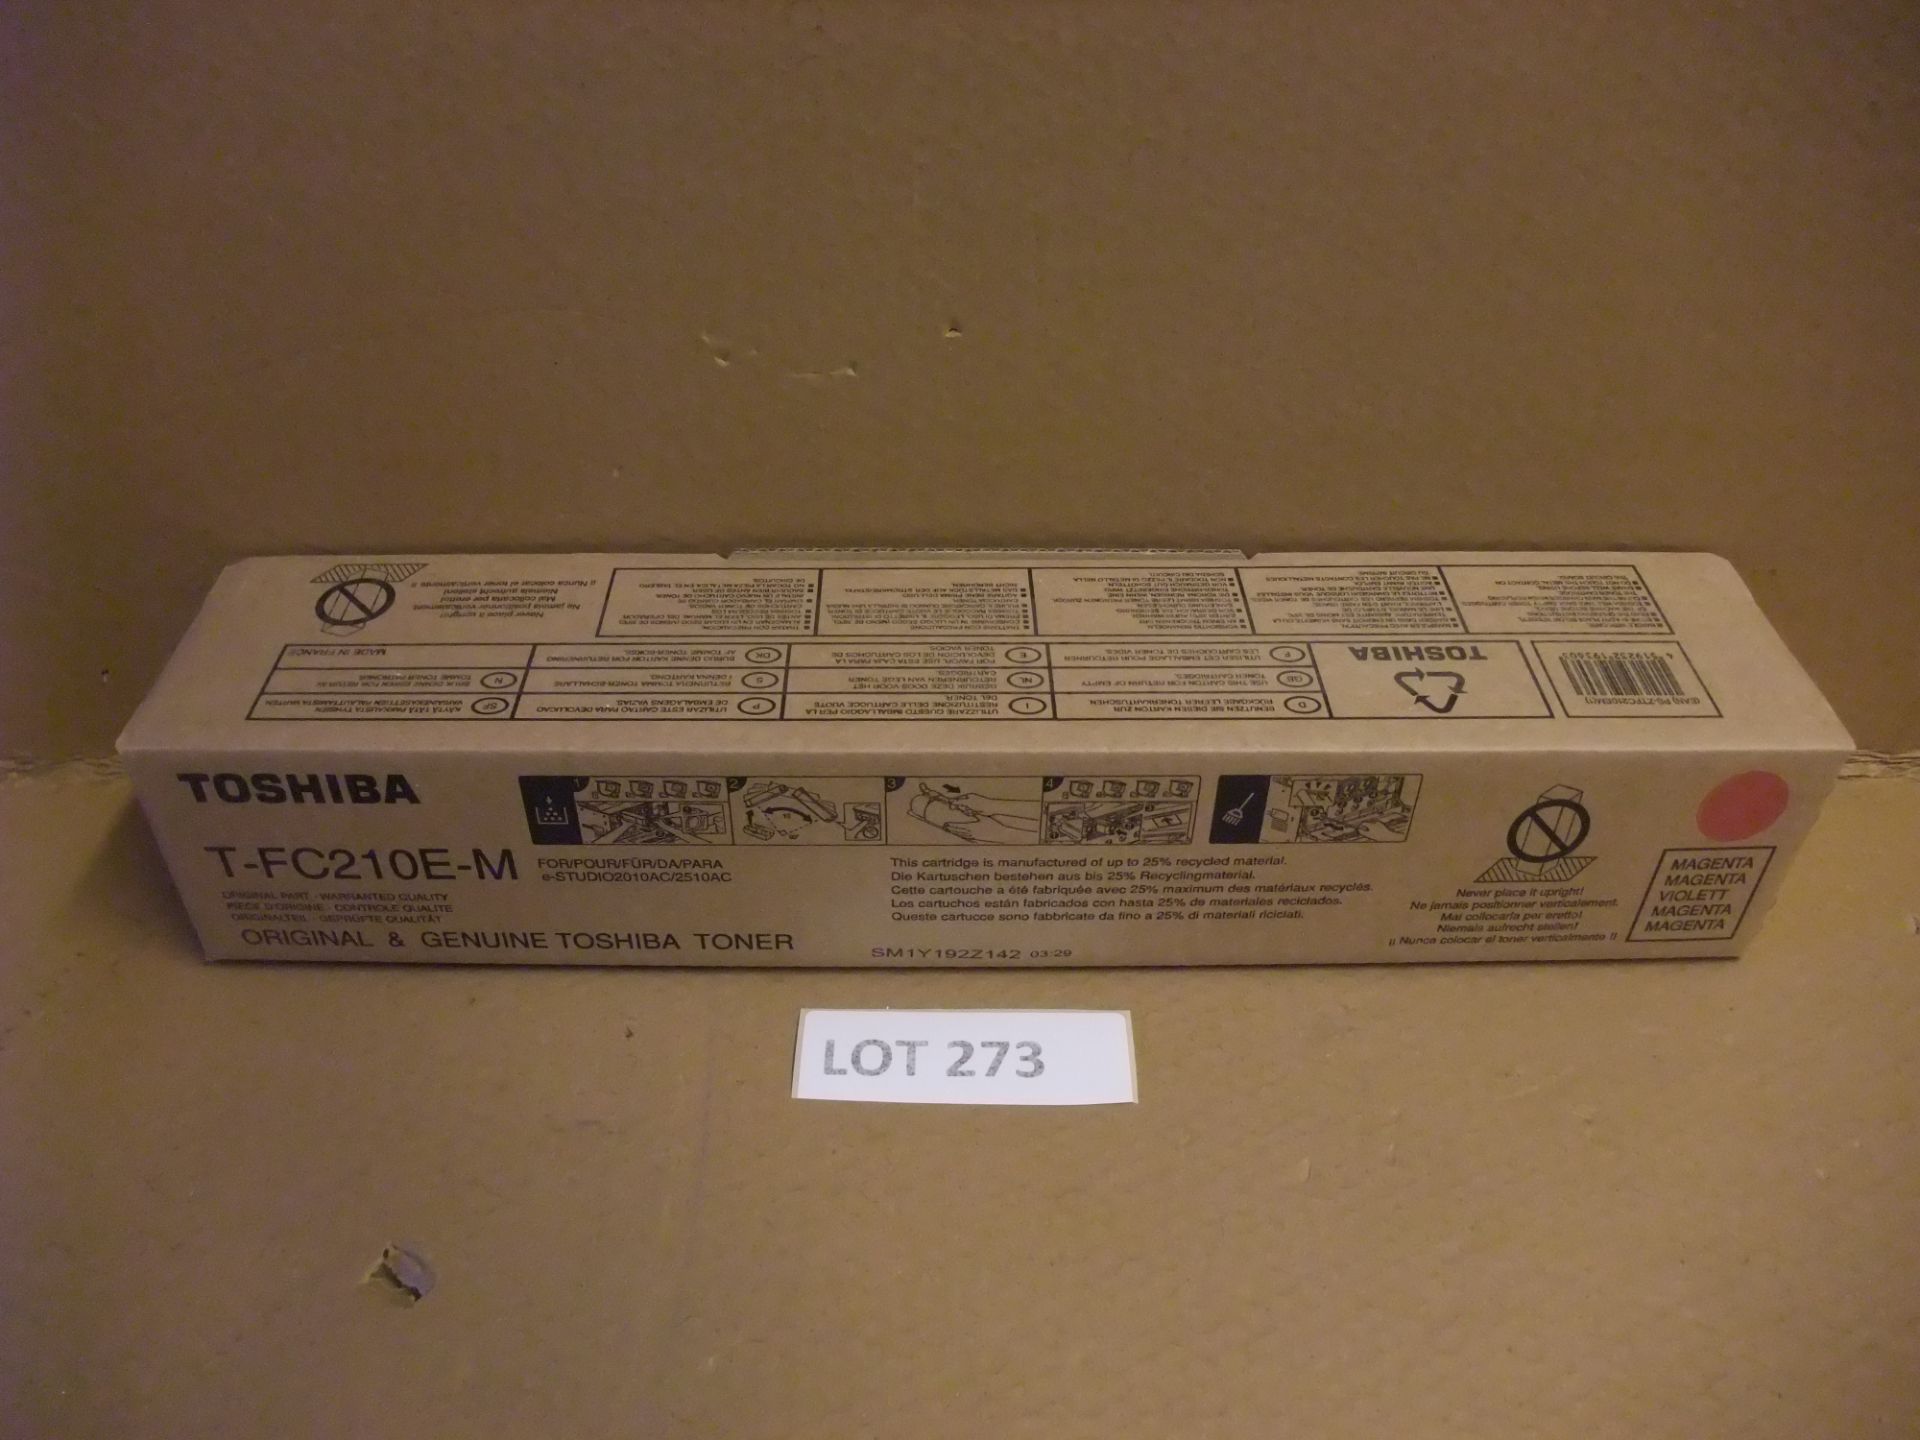 Toshiba T-FC210E-M toner (magenta) - for Toshiba eStudio 2010AC/2510ACPlease read the following